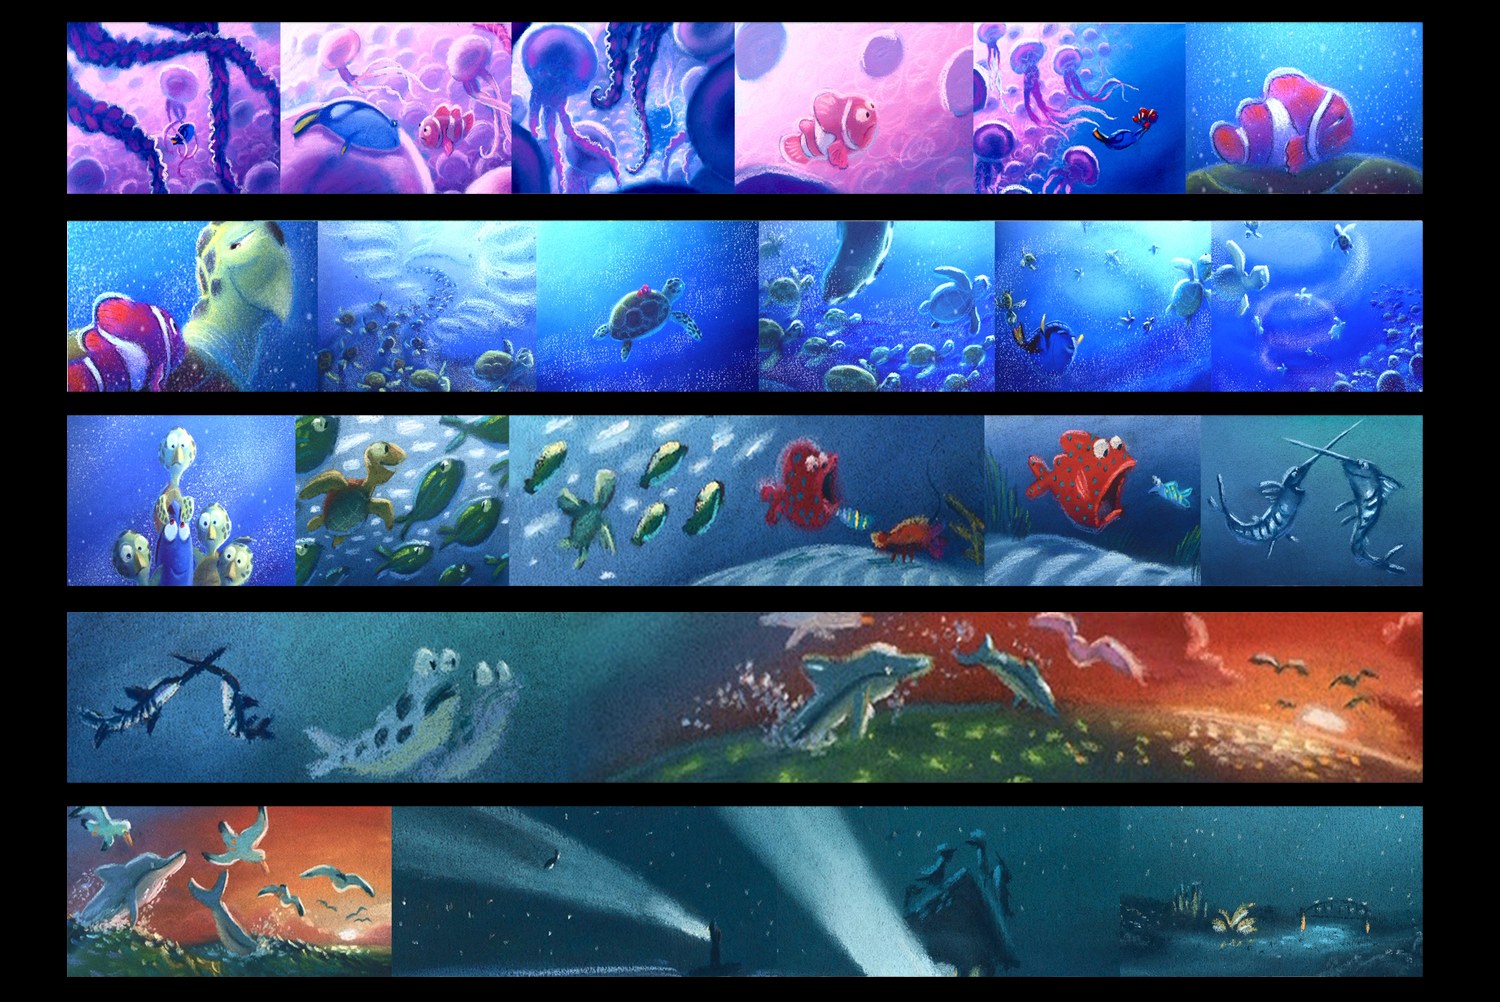 Pixar Color Supercut Video Showcases The Studio S Vivid